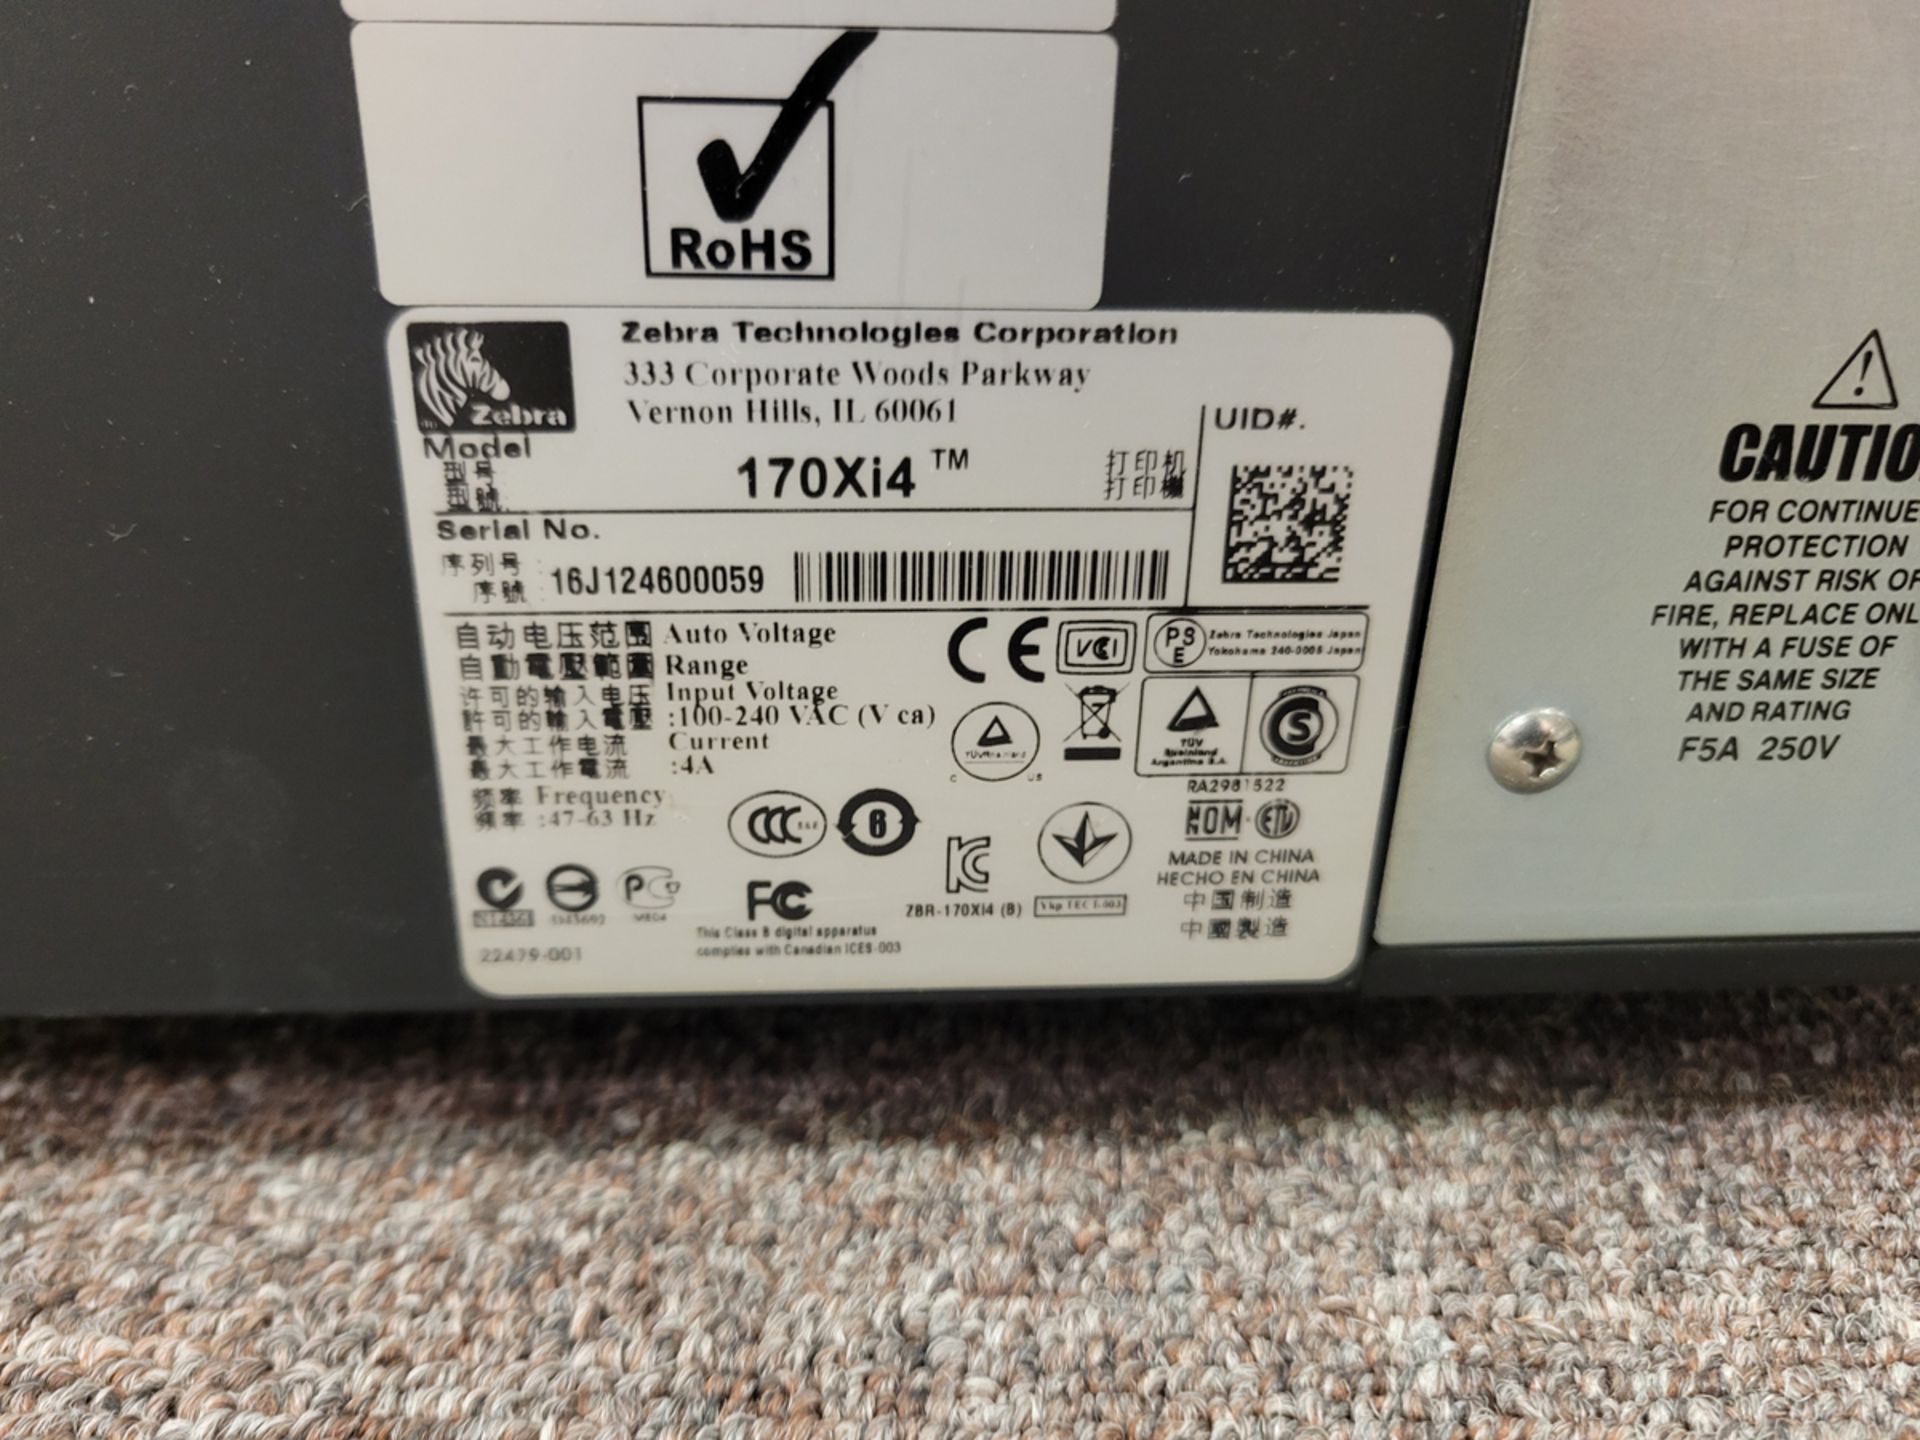 Zebra 170Xi4 Thermal Label Printer - Image 5 of 5